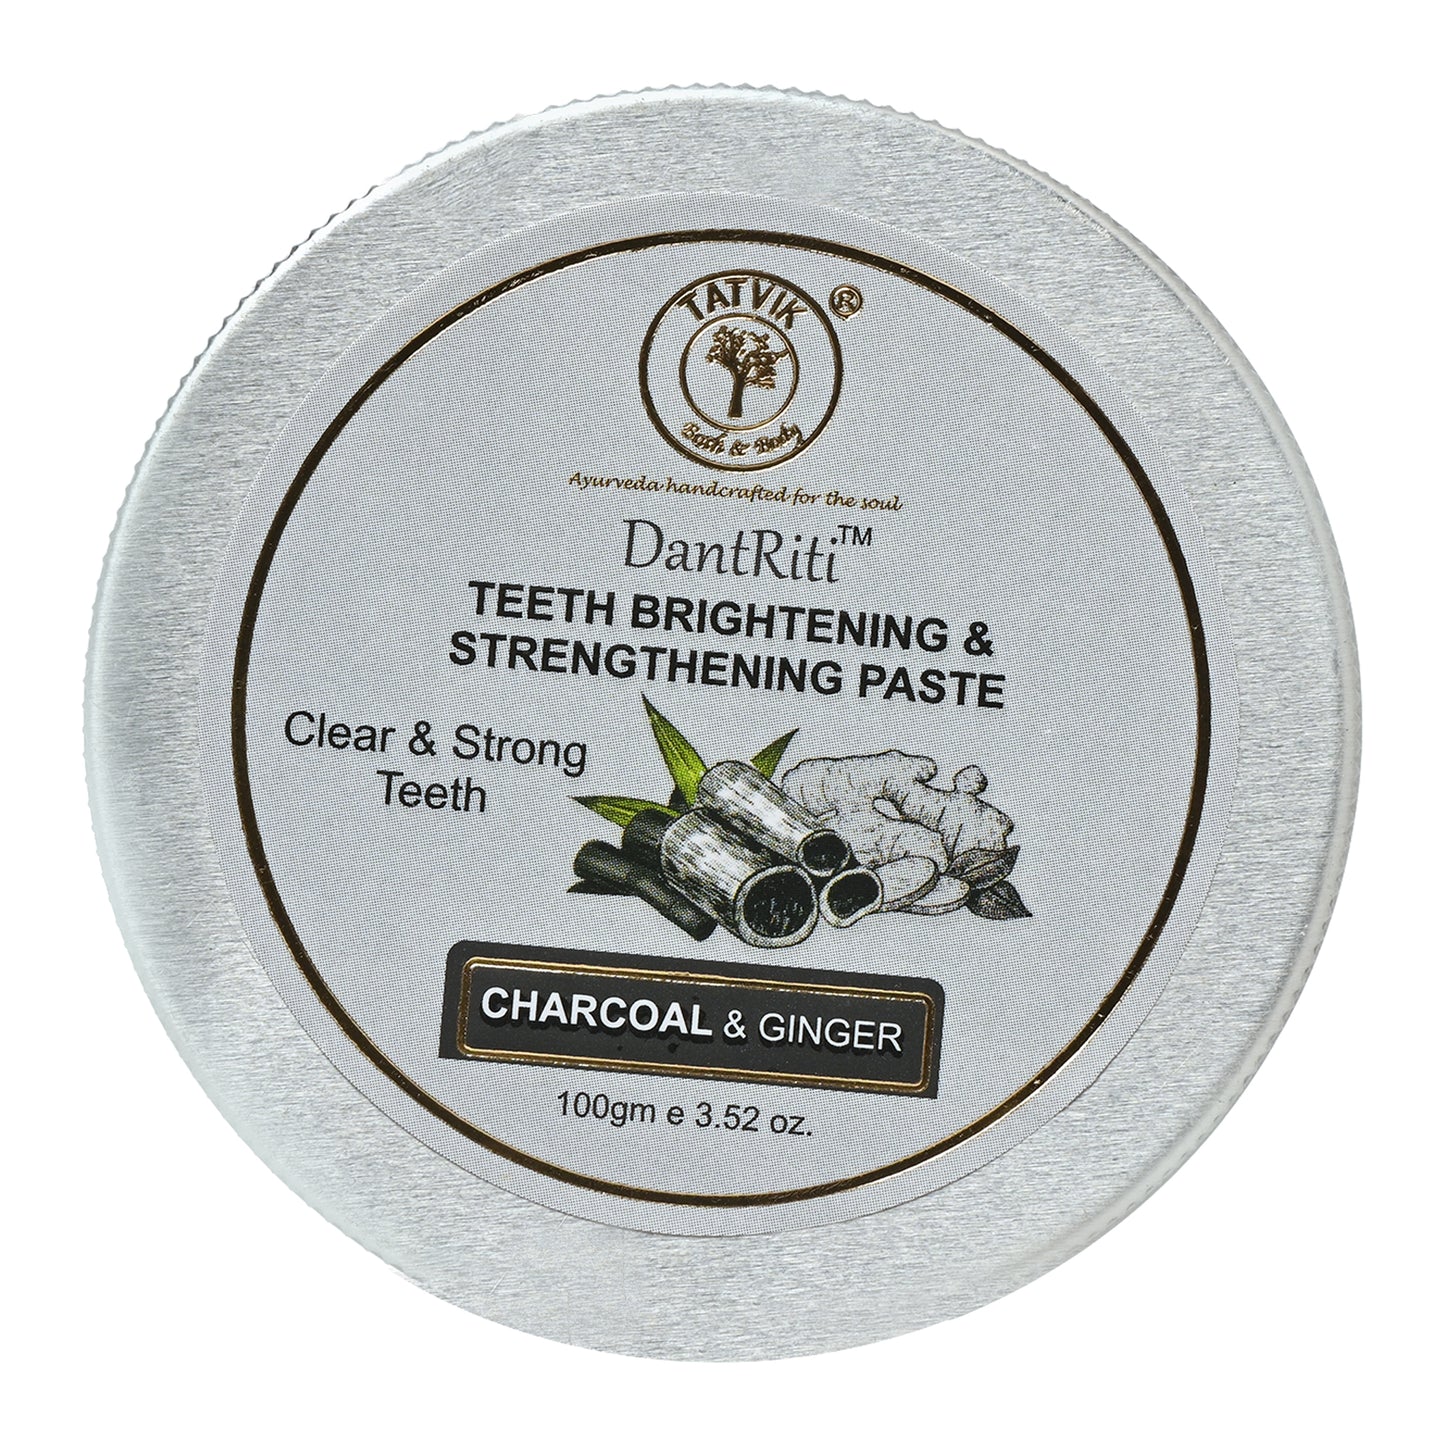 Dantriti Charcoal & Ginger - Teeth Brightening & Strengthening Paste - 100 Gm